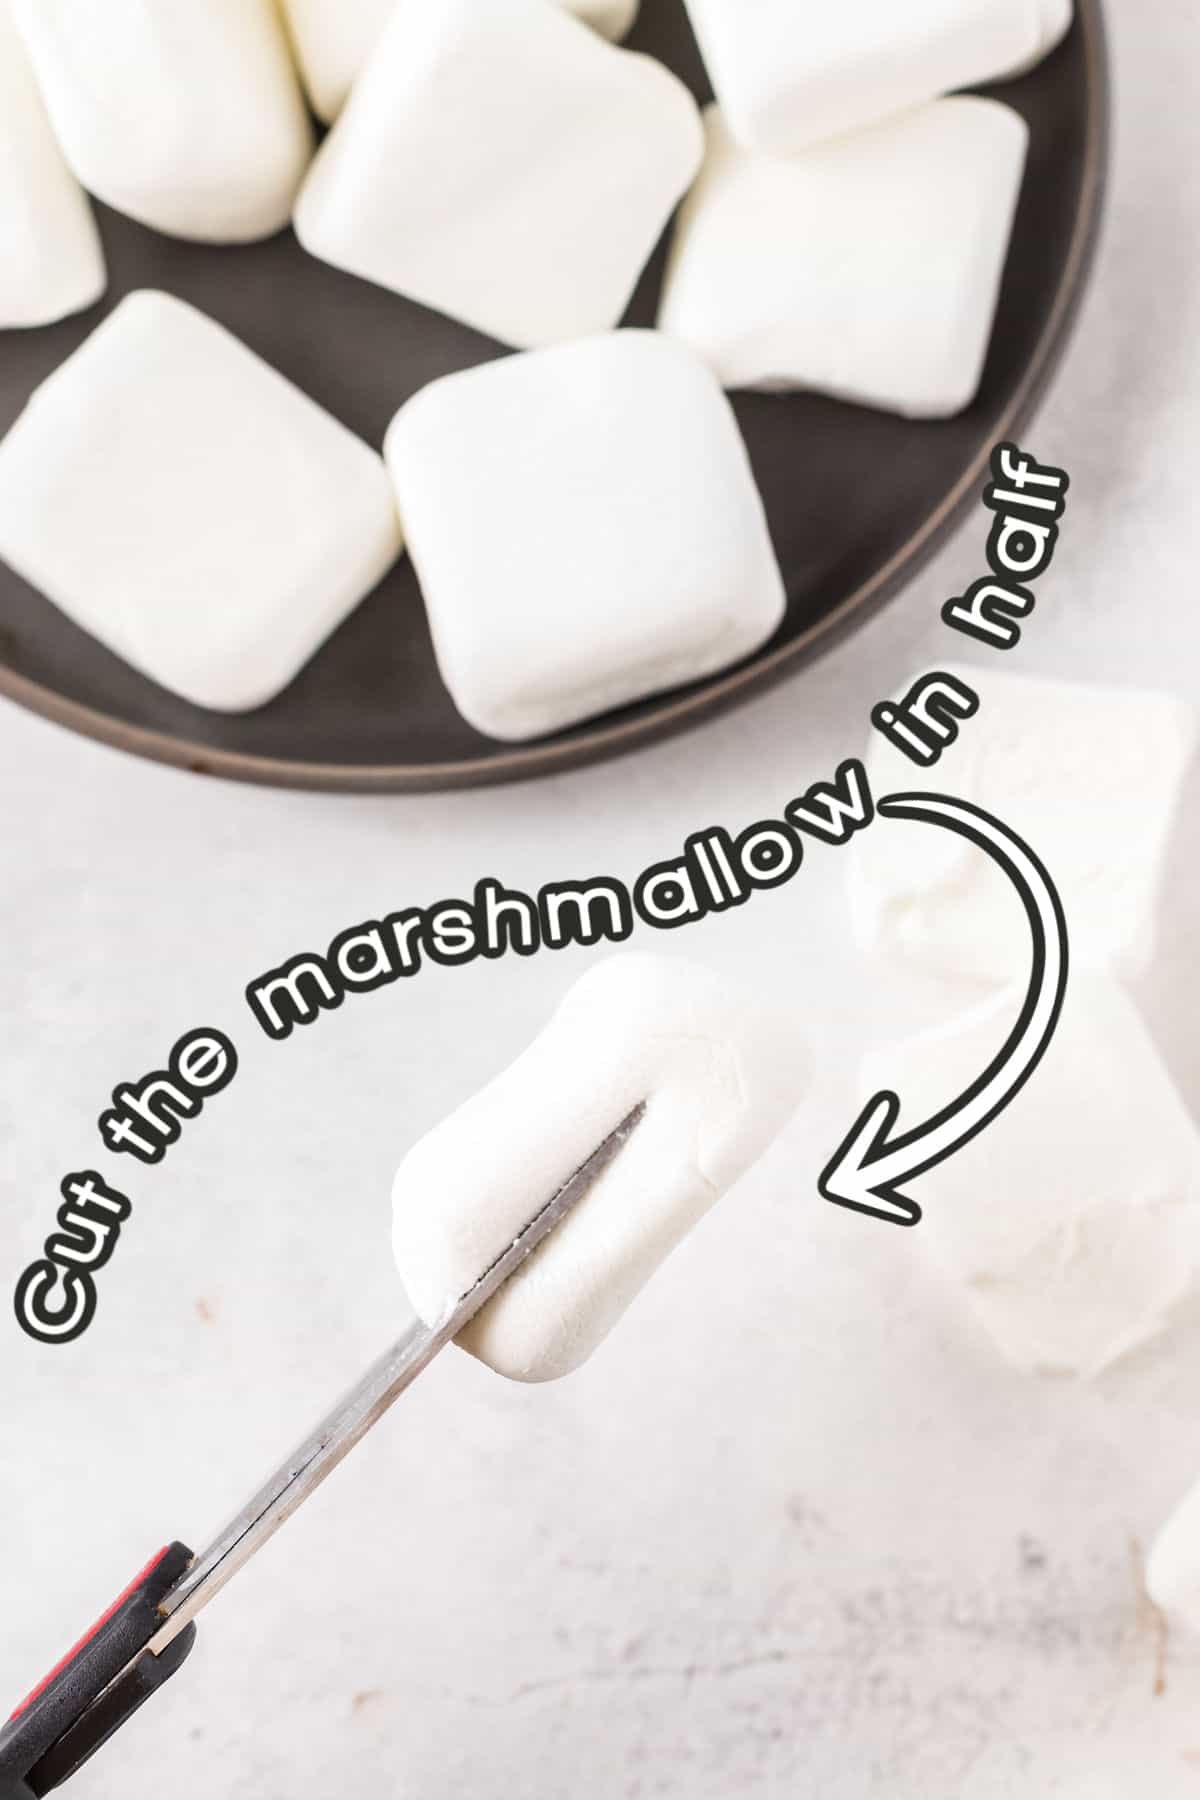 cutting marshmallow in half